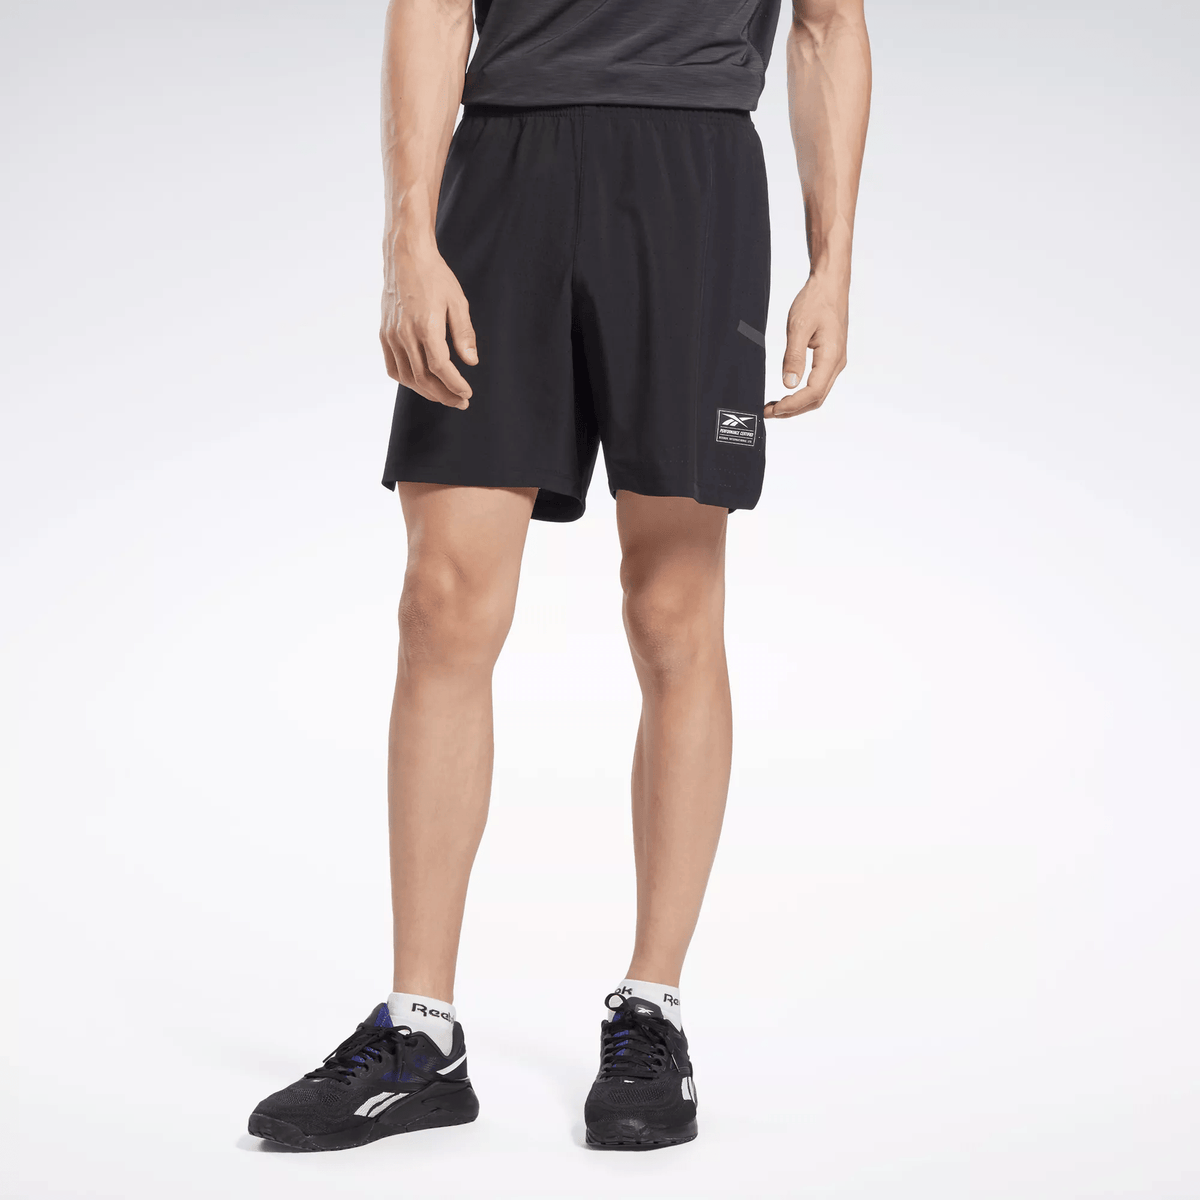 Reebok Men's Performance Certified Speed+ Shorts Black